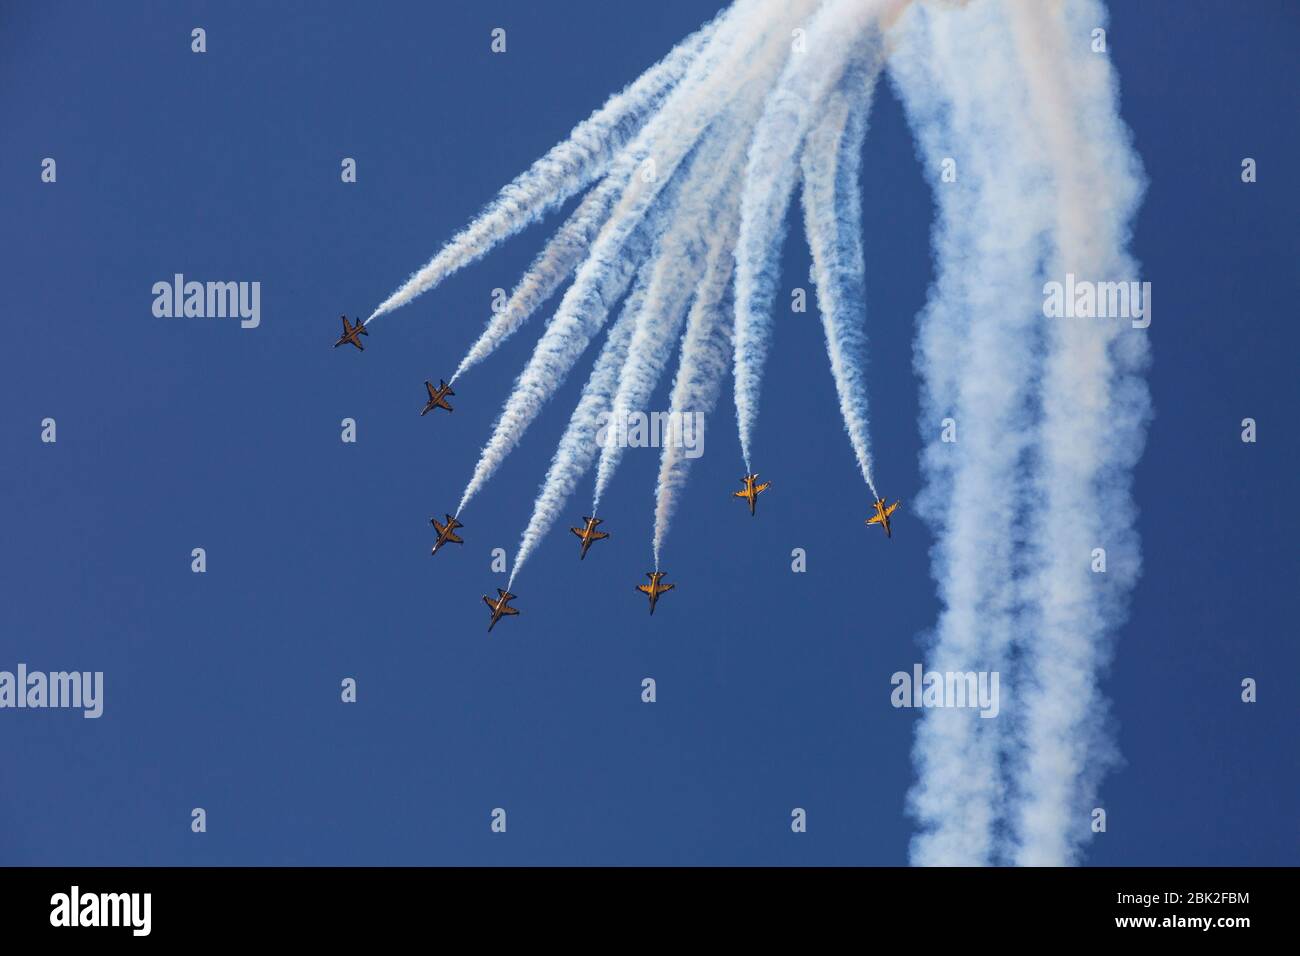 Black Eagles acrobatic performing in the air show at the Seoul International Aerospace & Defense Exhibition 2019 (Seoul ADEX 2019).in Seongnam, Korea Stock Photo